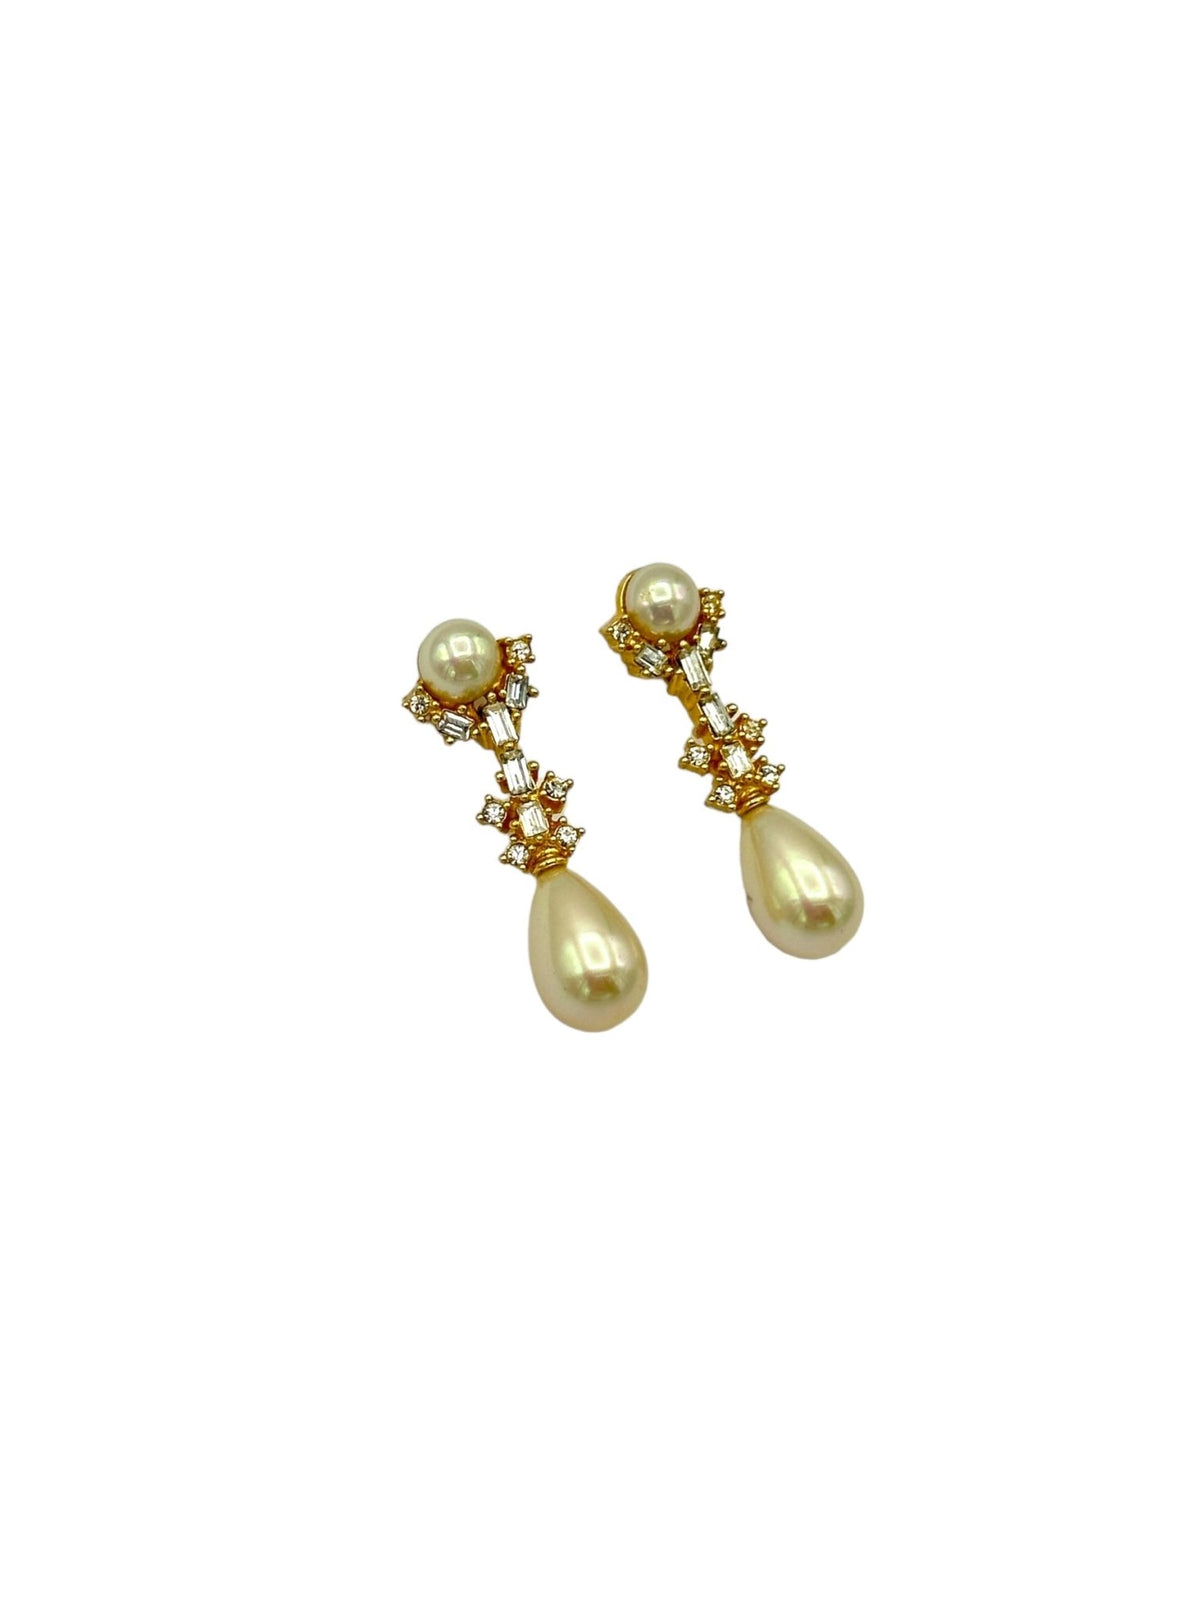 White Pearlized & Rhinestone Dangle Pierced Earrings - 24 Wishes Vintage Jewelry